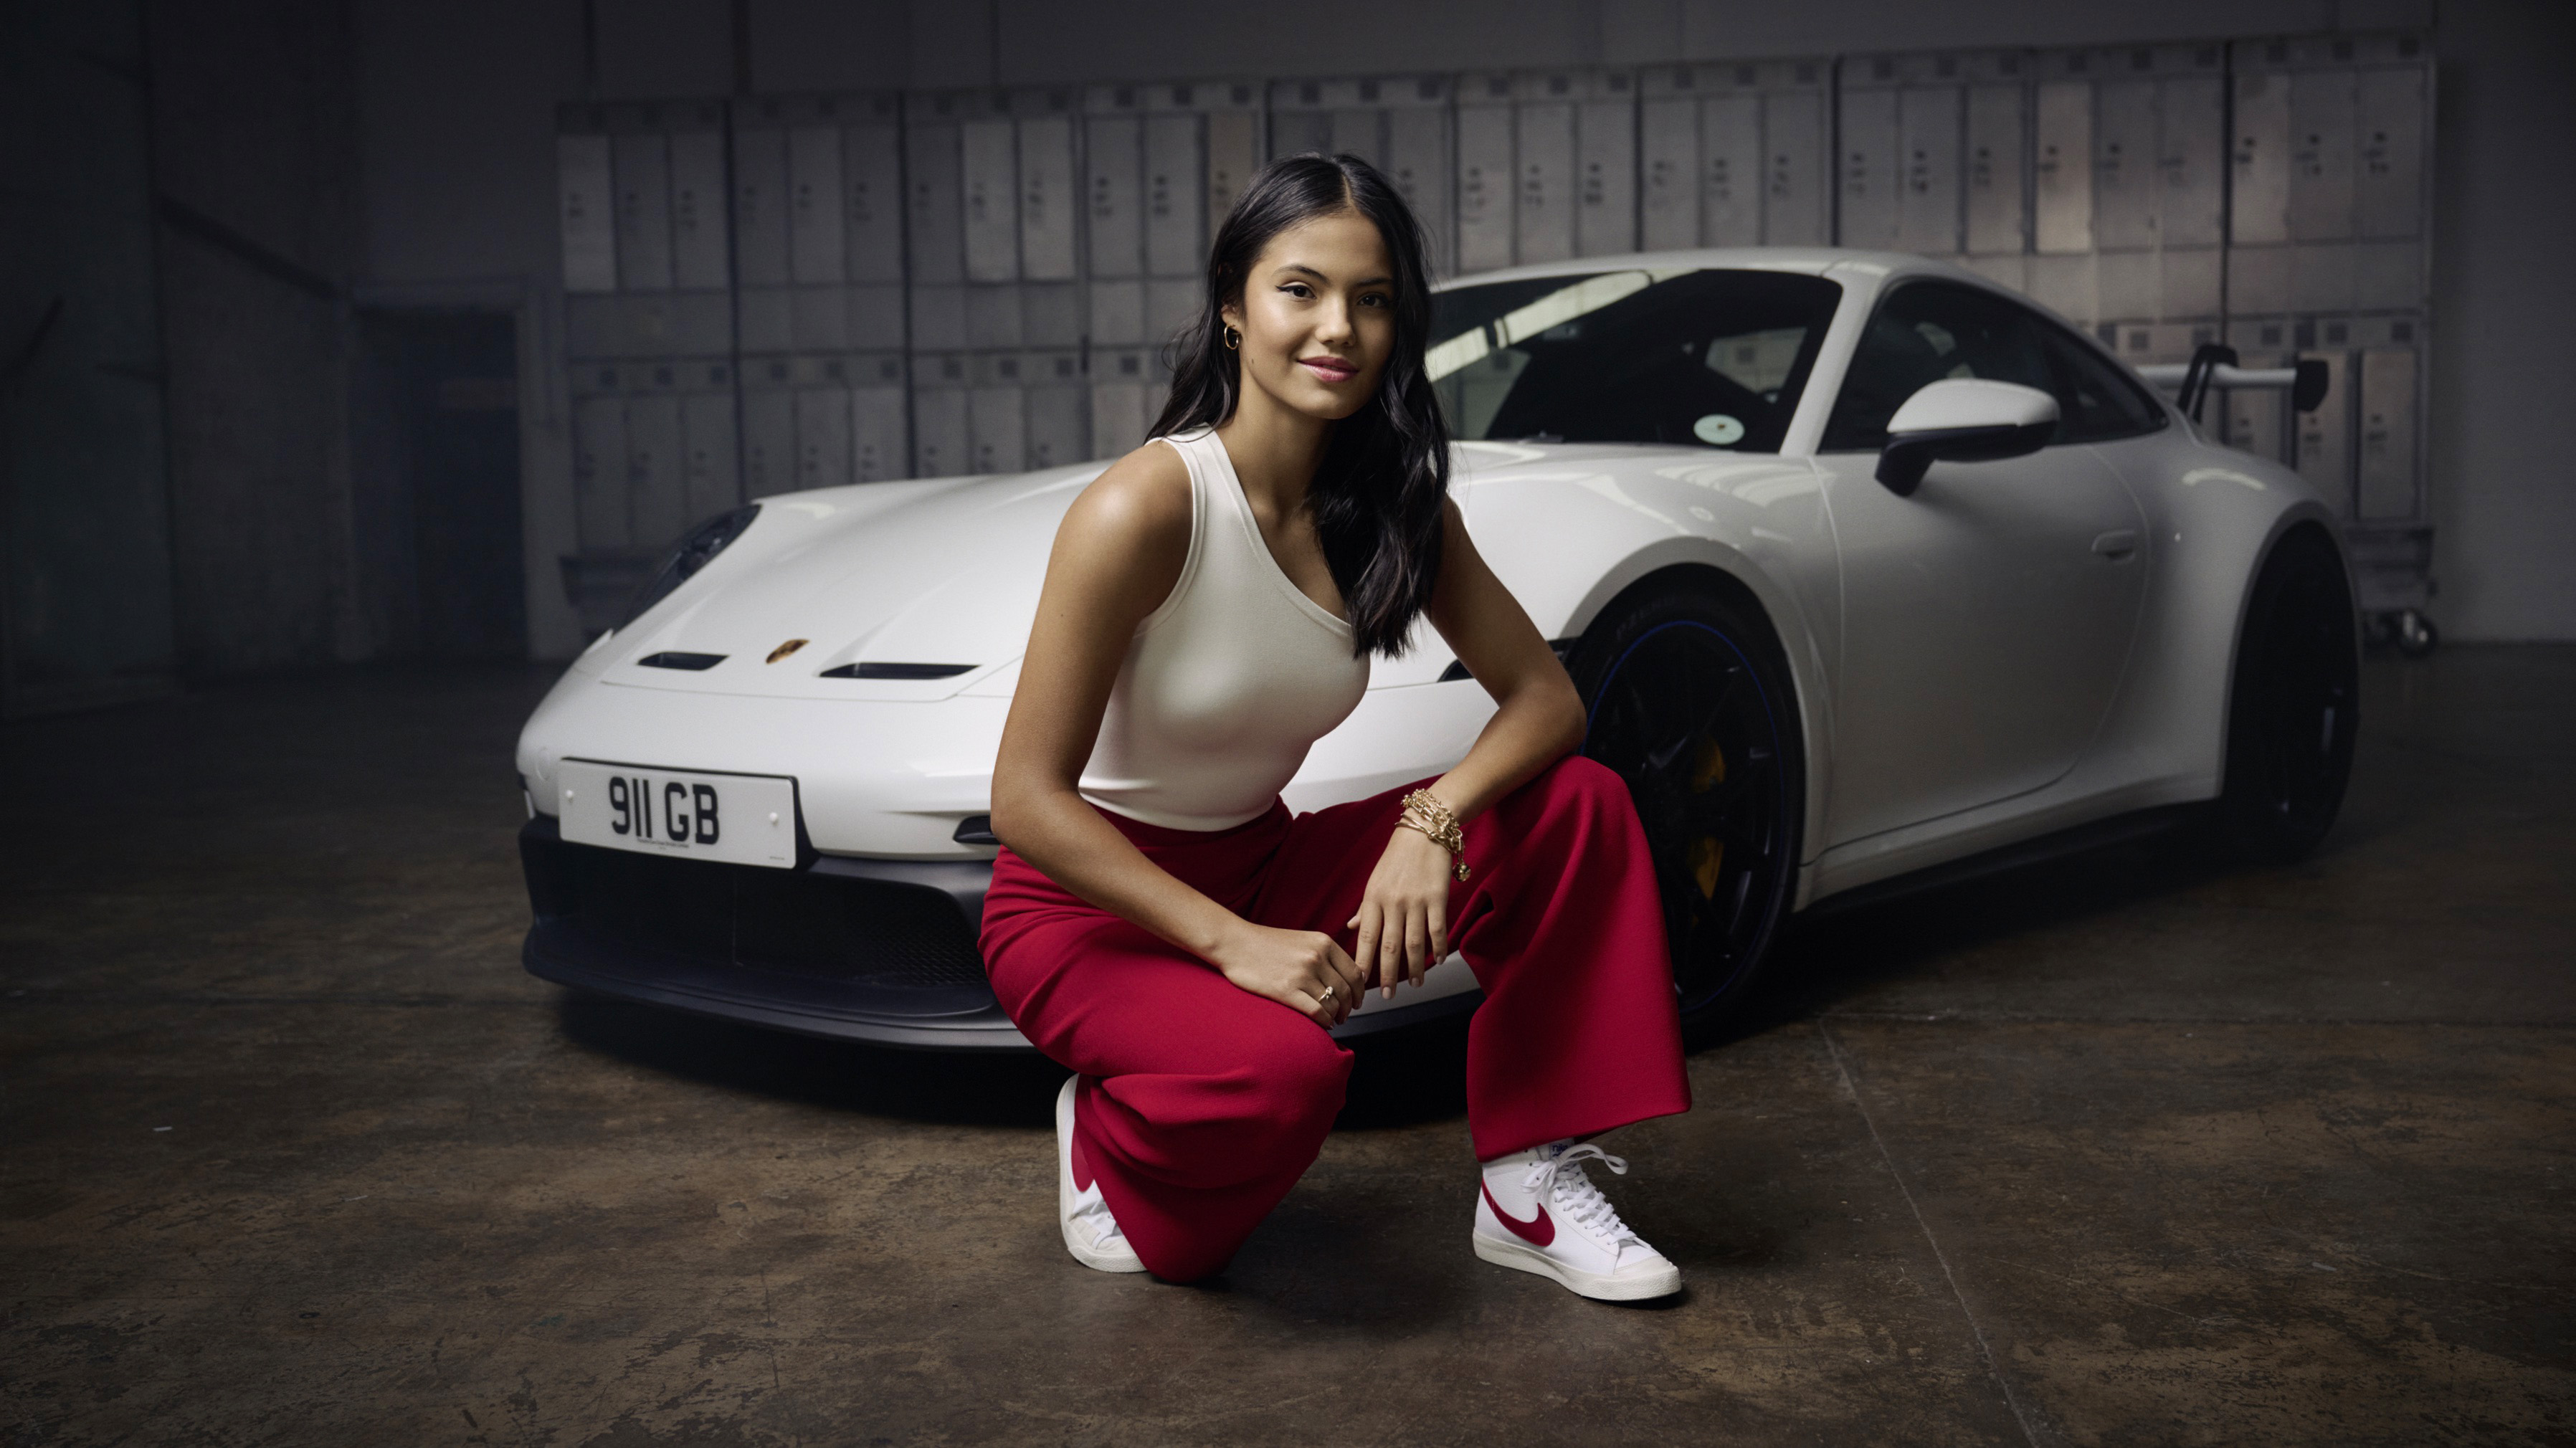 Emma Raducanu Tennis Sport British Porsche Commercial Athletes Women Car Women With Cars 3593x2020